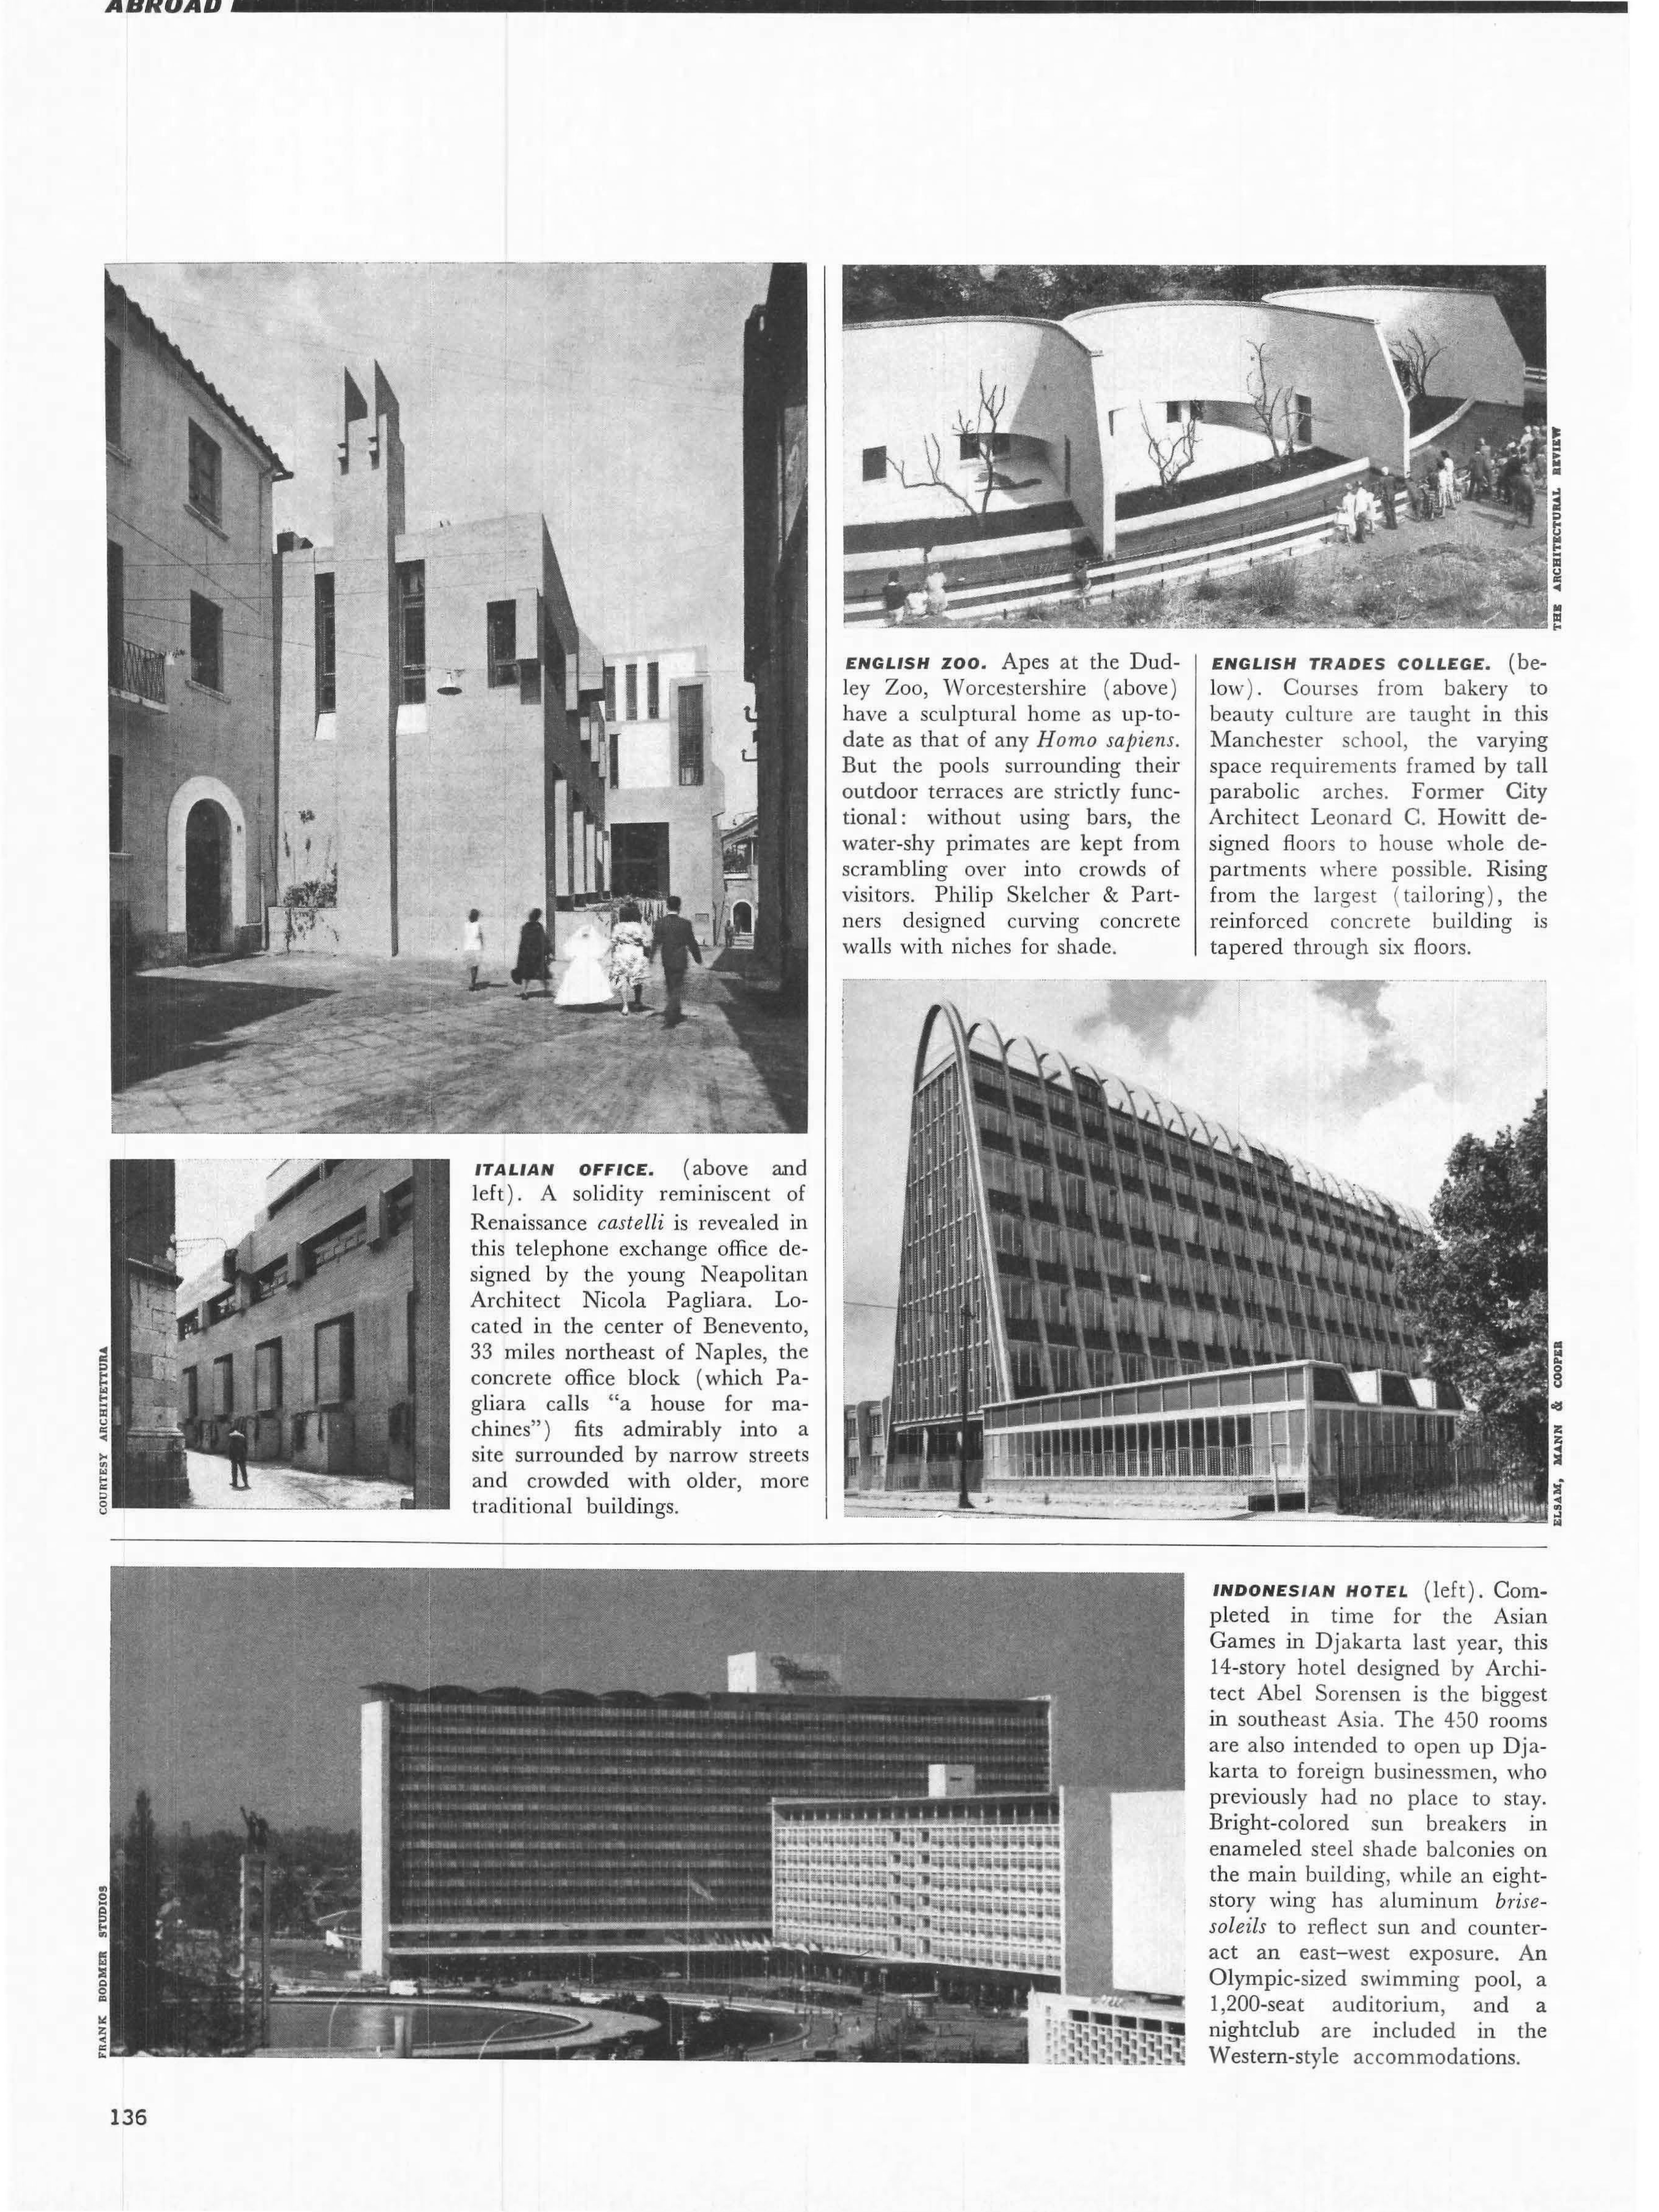 1963. “Italian office (Telephone exchange office, Nicola Pagliara, Benevento)”, Architectural Forum, 120, no. 9 (September): 136.